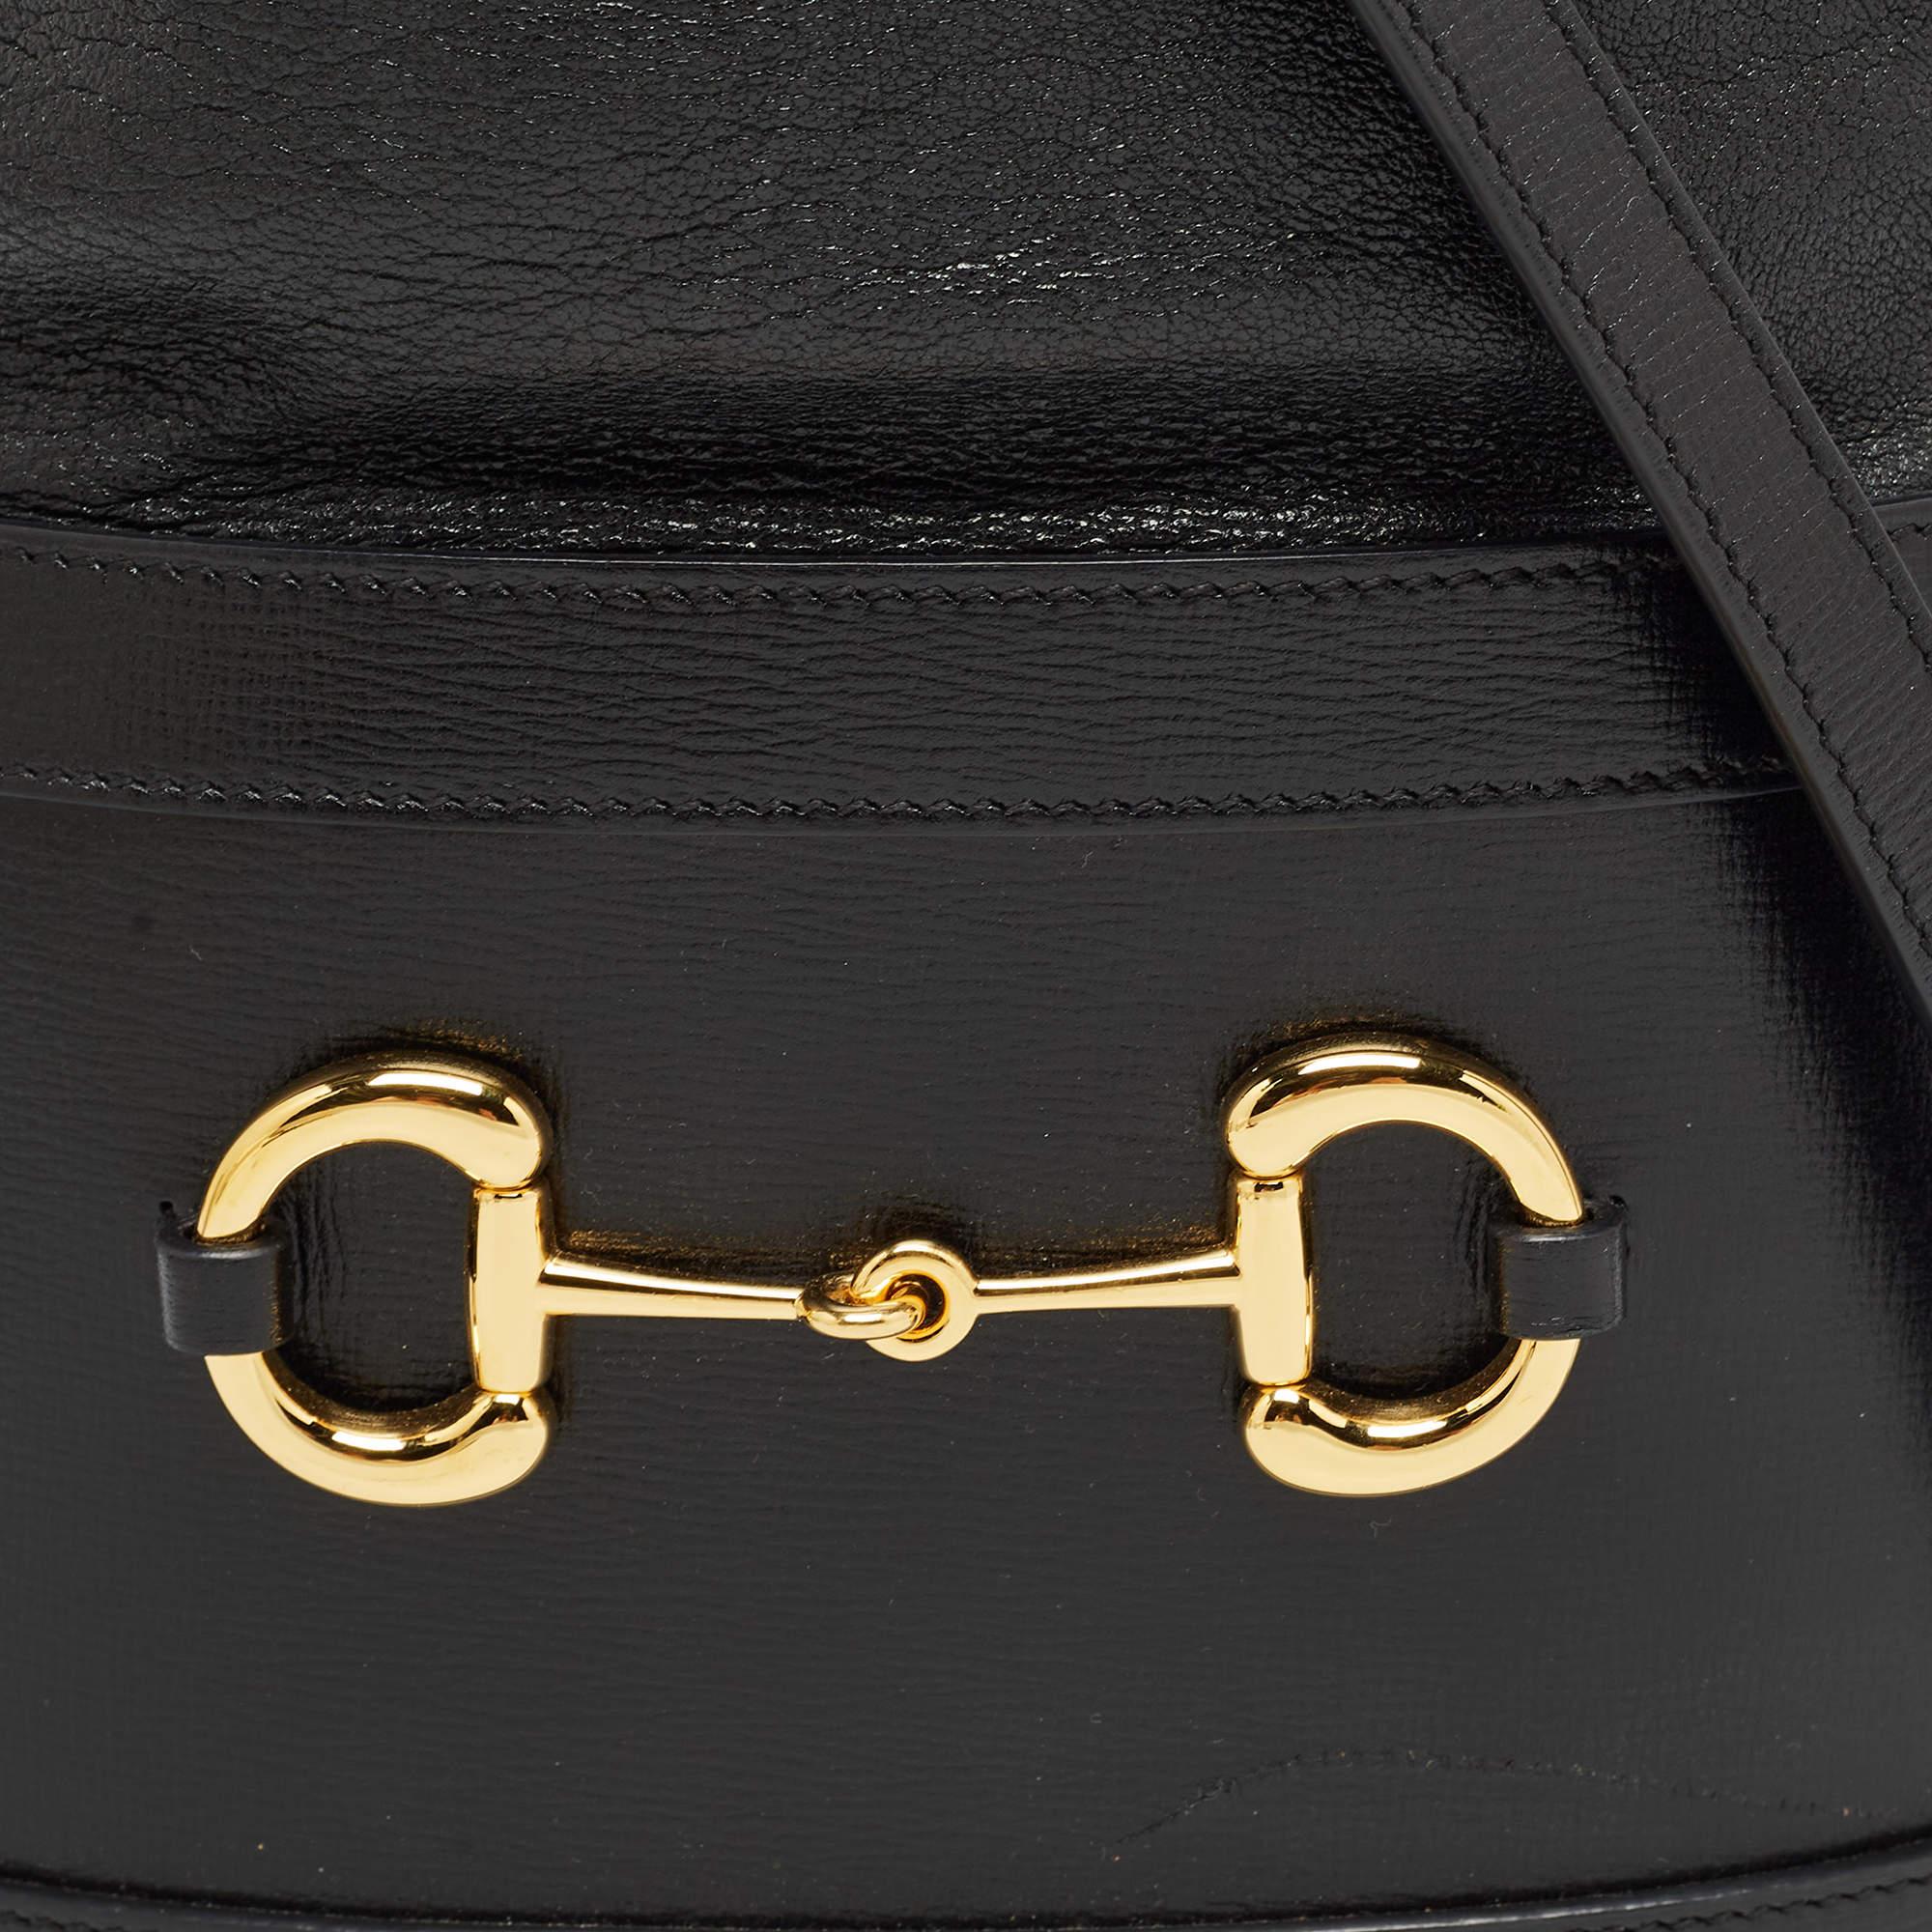 Gucci Black Leather 1955 Horsebit Bucket Bag 5